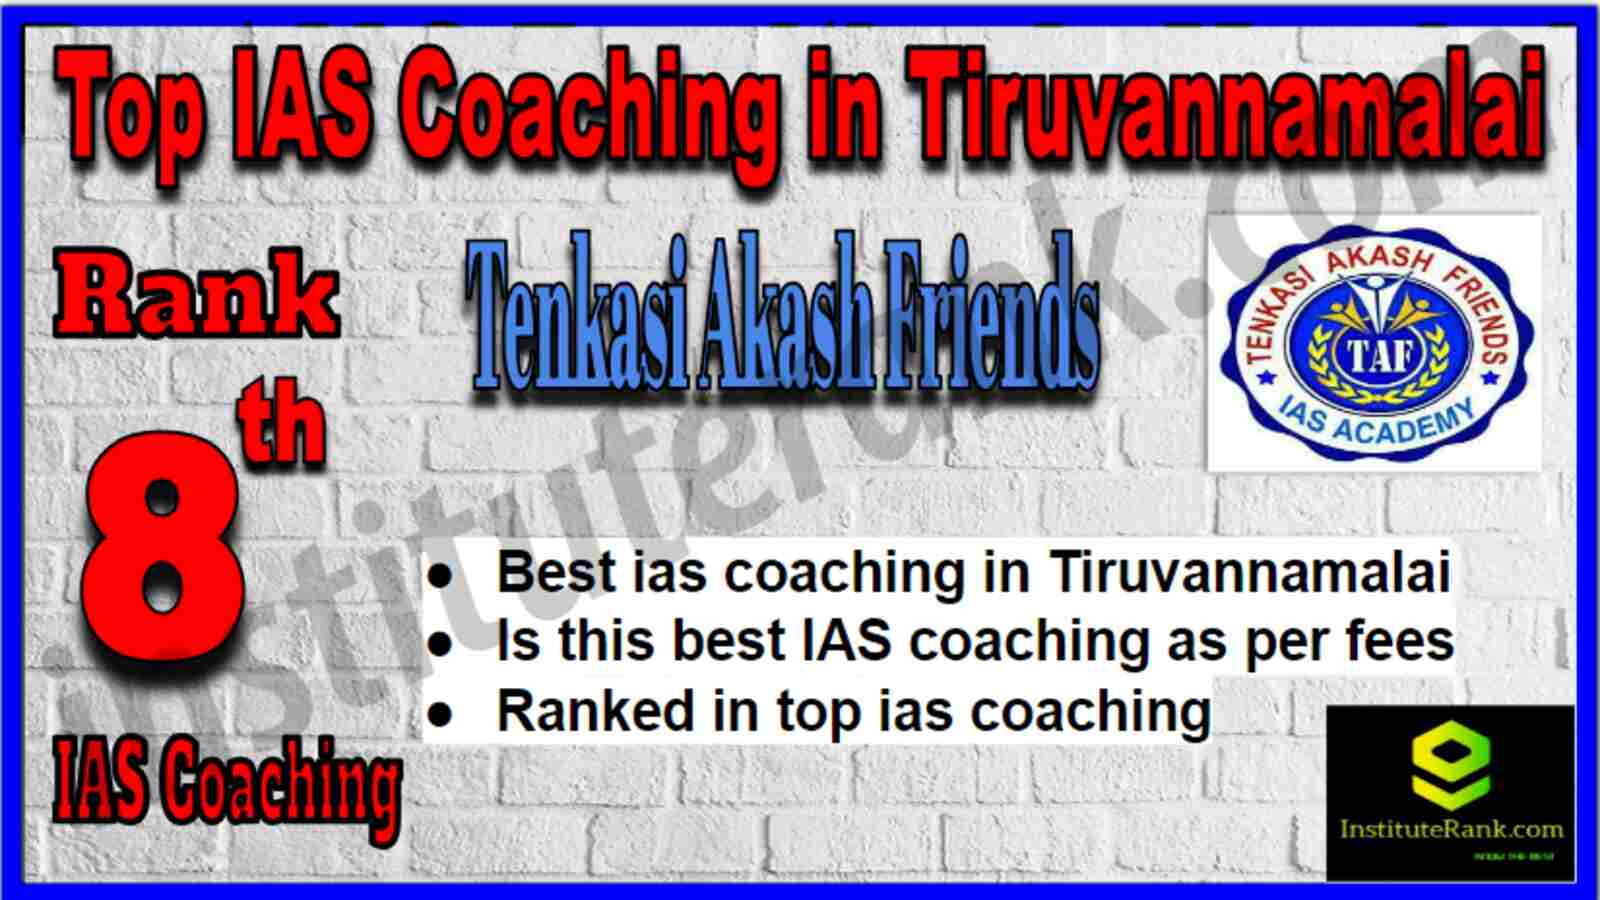 Rank 8 Top IAS Coaching in Tiruvannamalai